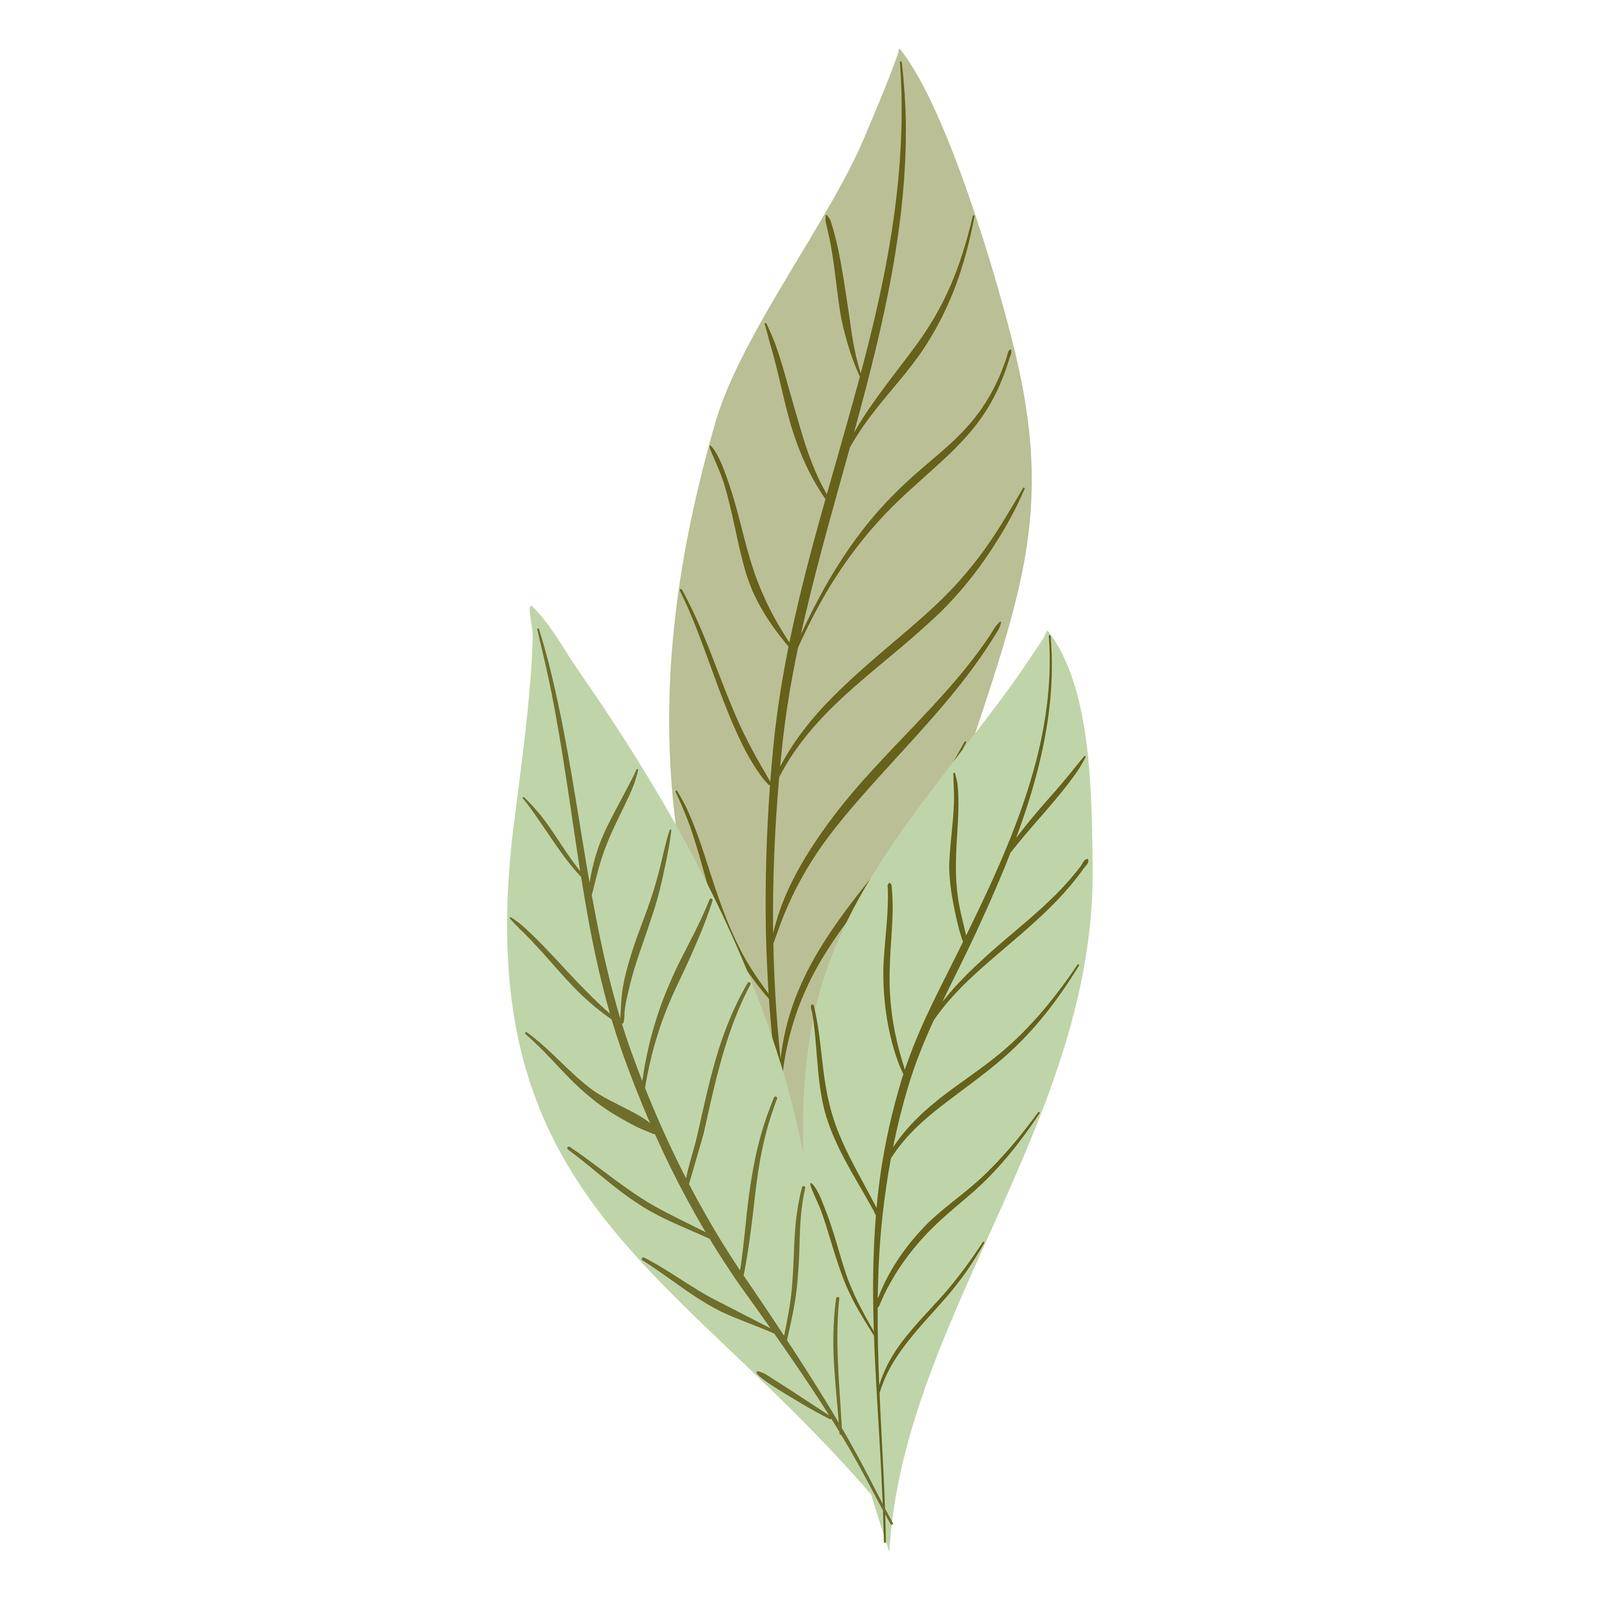 Hand Drawn Flat Doodle Leaf. Nature Green Leaf Design Element. by iliris